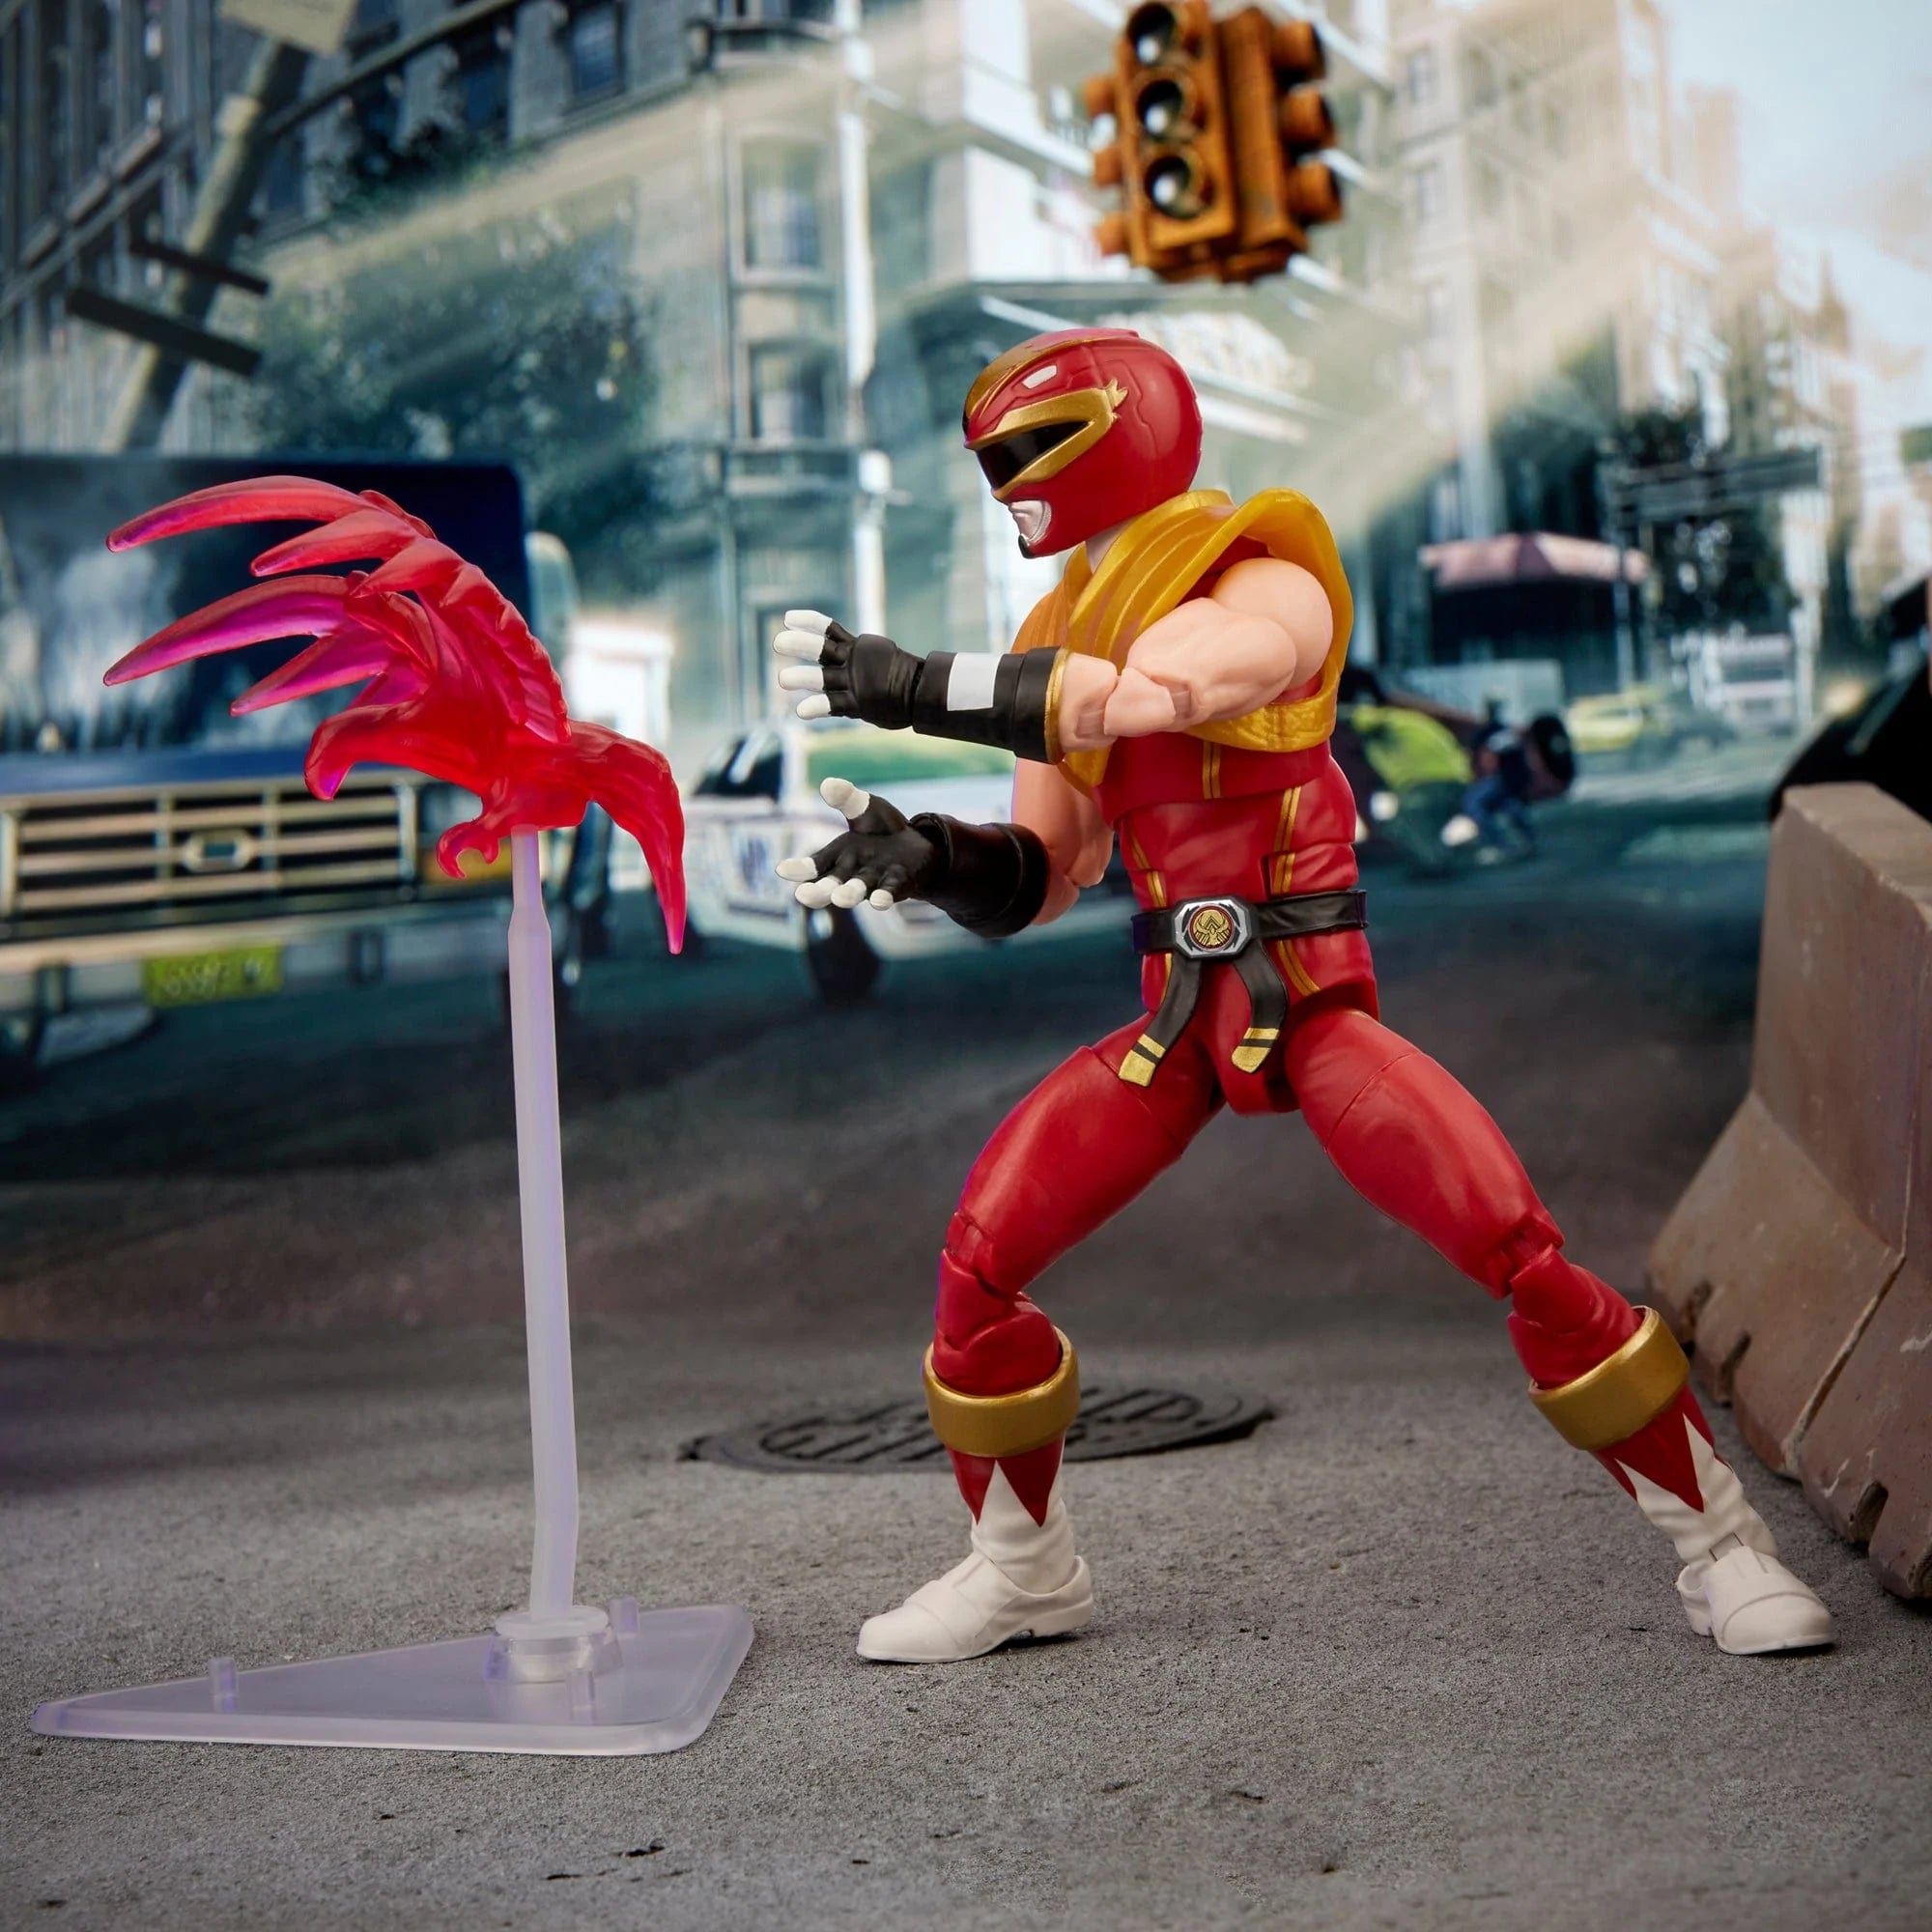 Power Rangers X Street Fighter Lightning Collection Morphed Ken Soaring Falcon Media Fireball